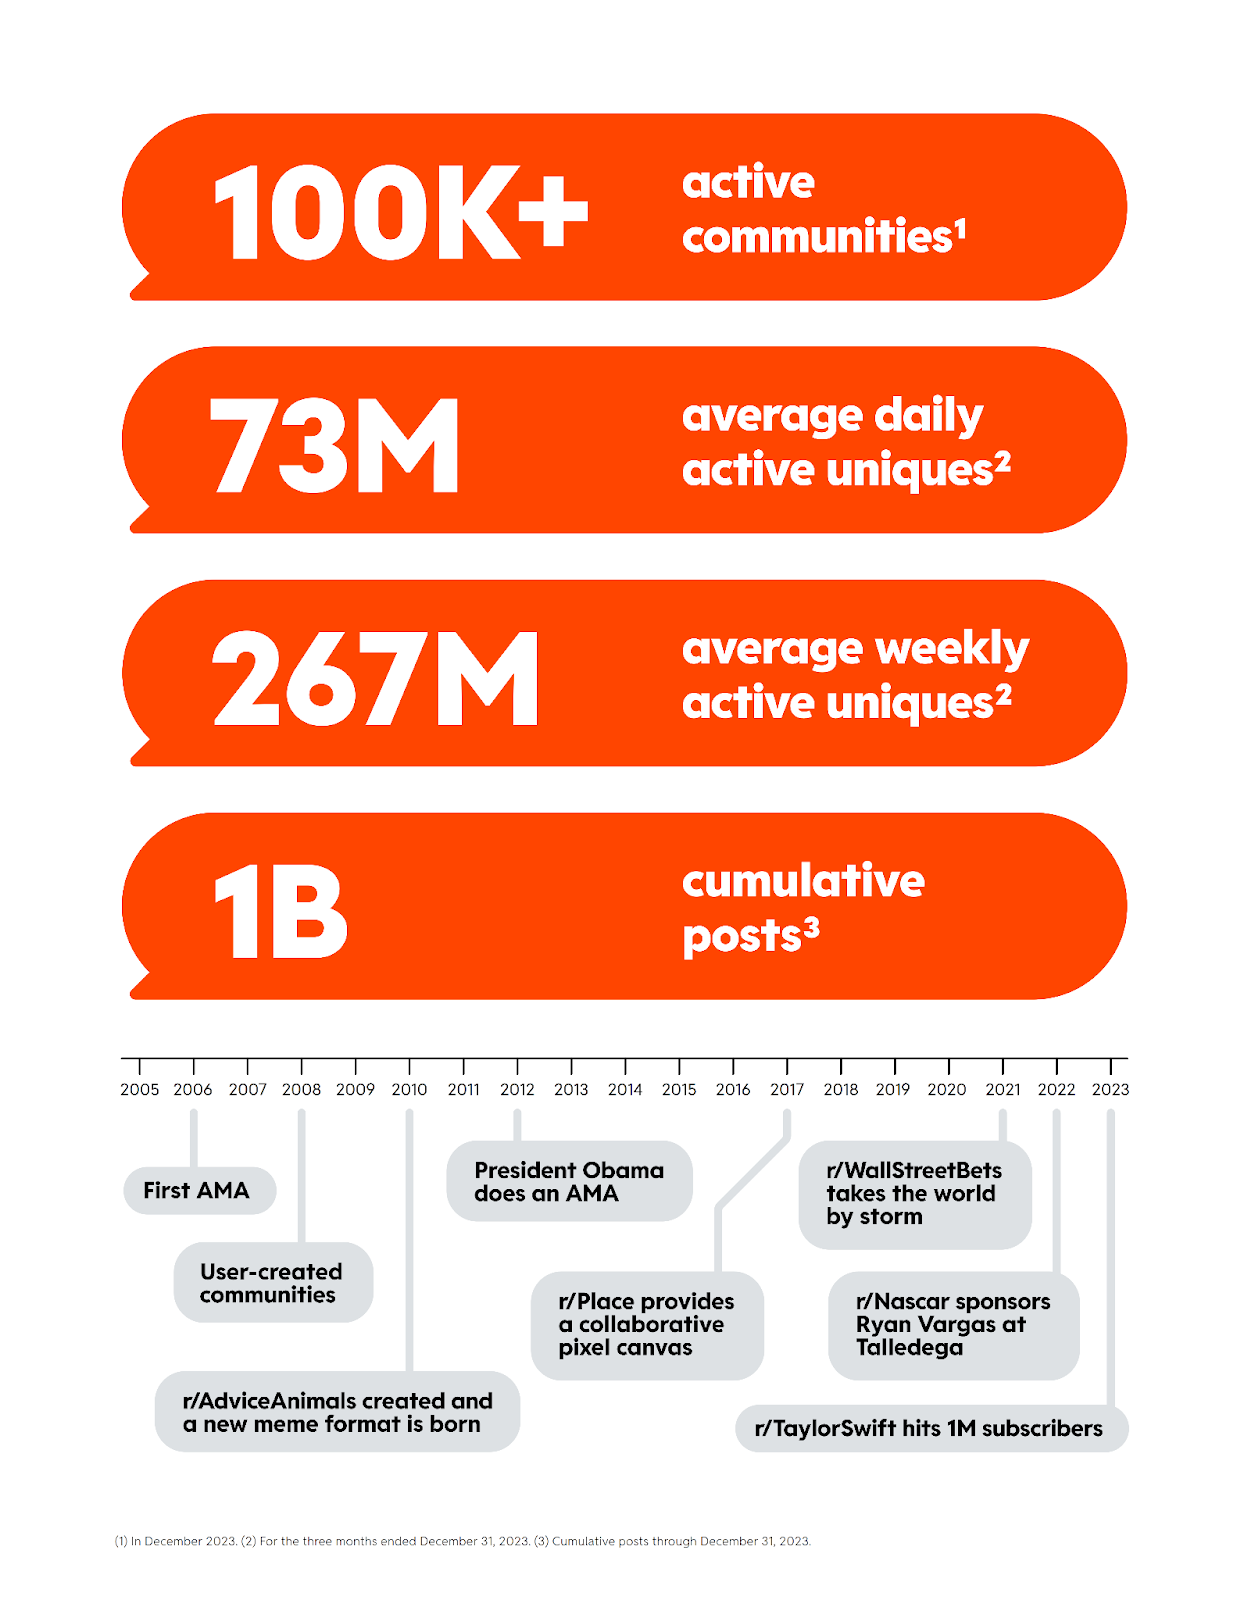 Reddit stats 100k+ active communities, 73 million avg. daily active uniques, 276 million avg. weekly active uniques, 1B cumulative posts, with a timeline below